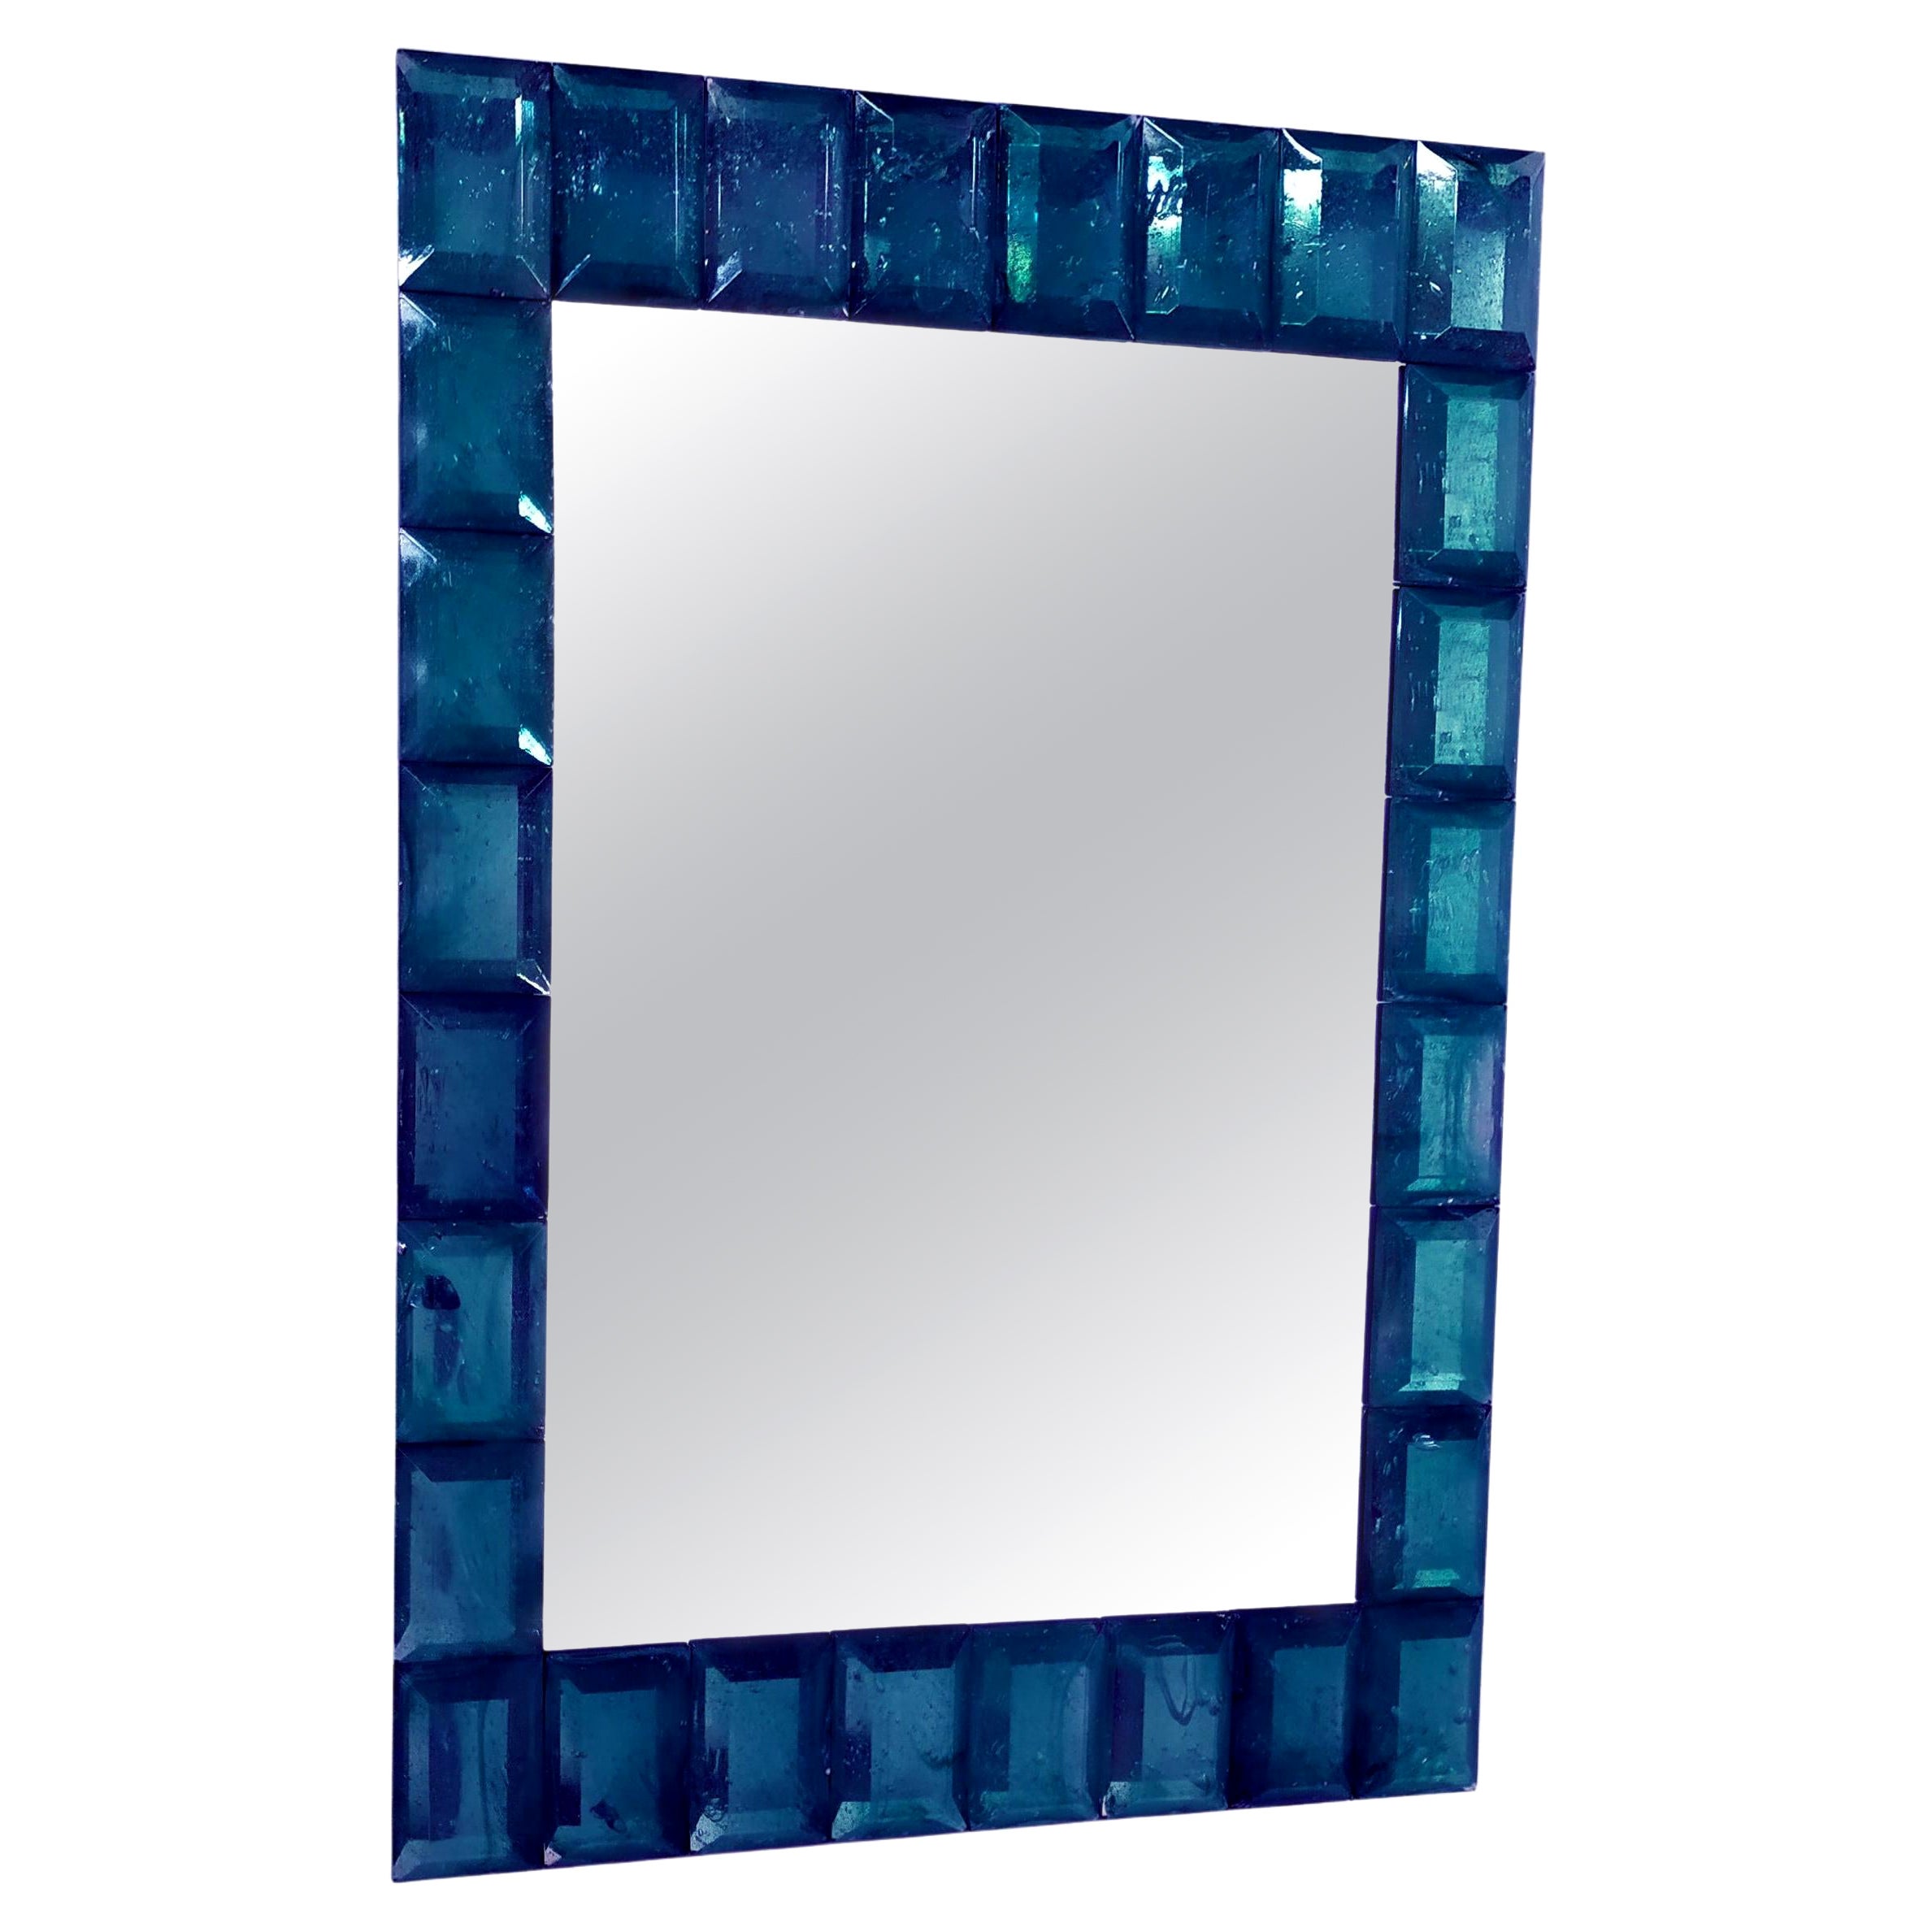 "Sapphire" Murano Glass Mirror in Contemporary Style by Fratelli Tosi Murano For Sale